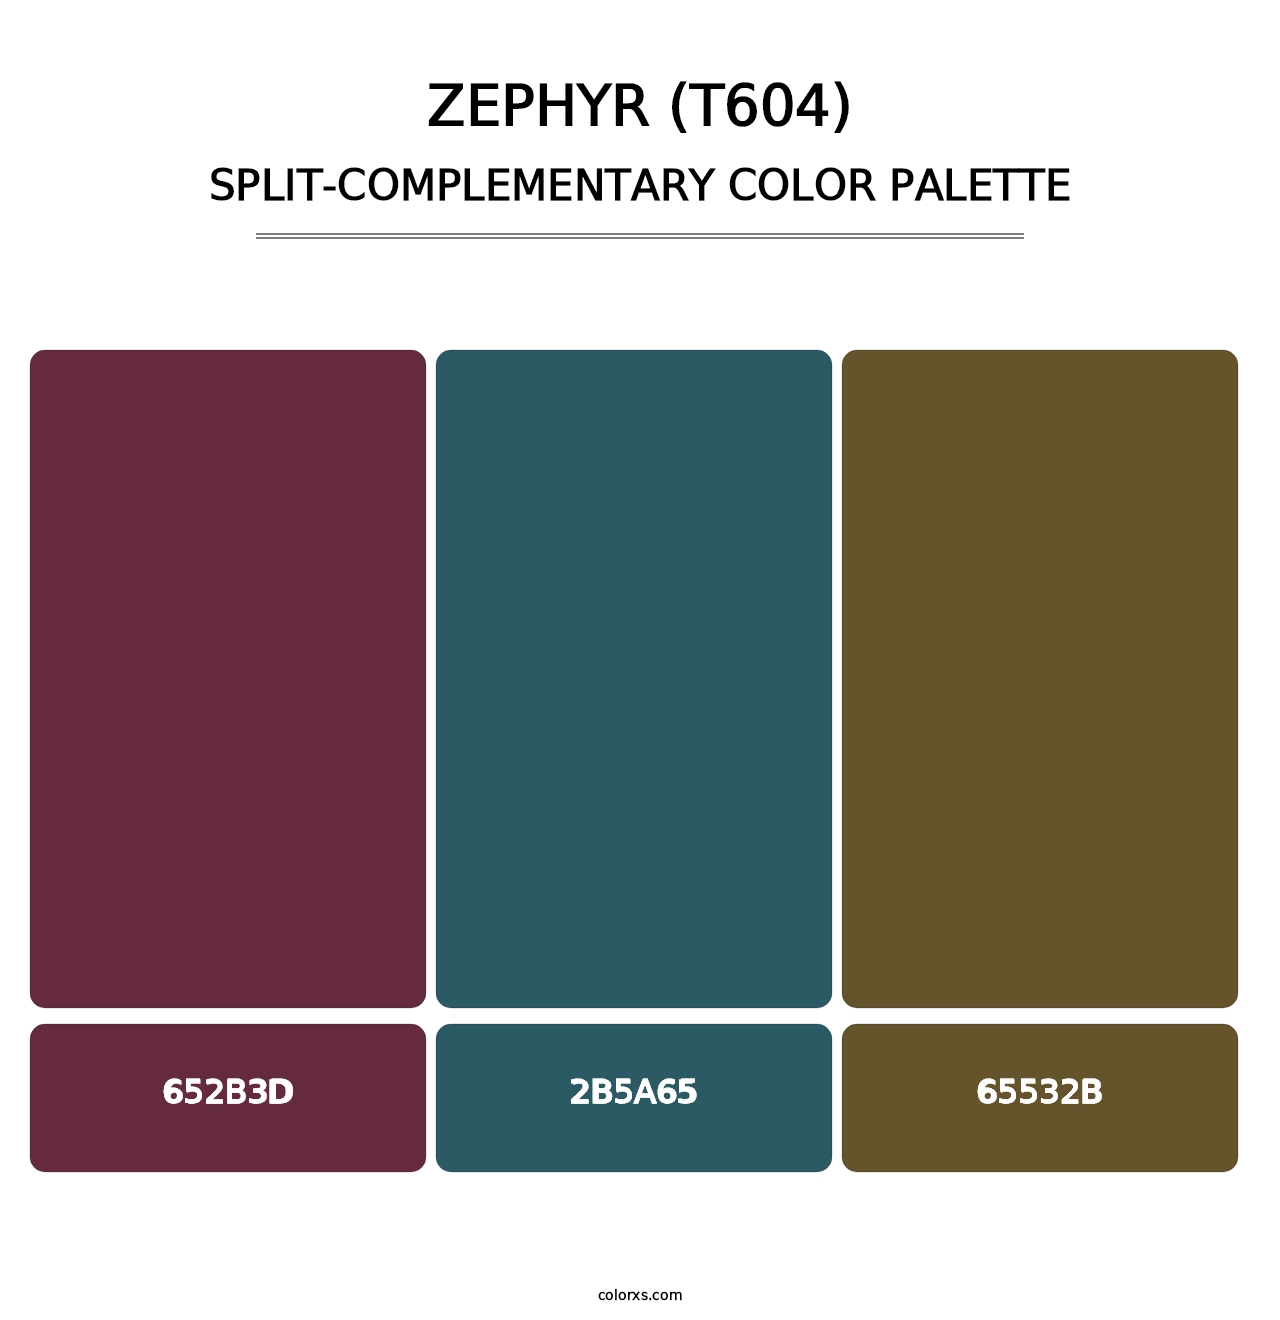 Zephyr (T604) - Split-Complementary Color Palette